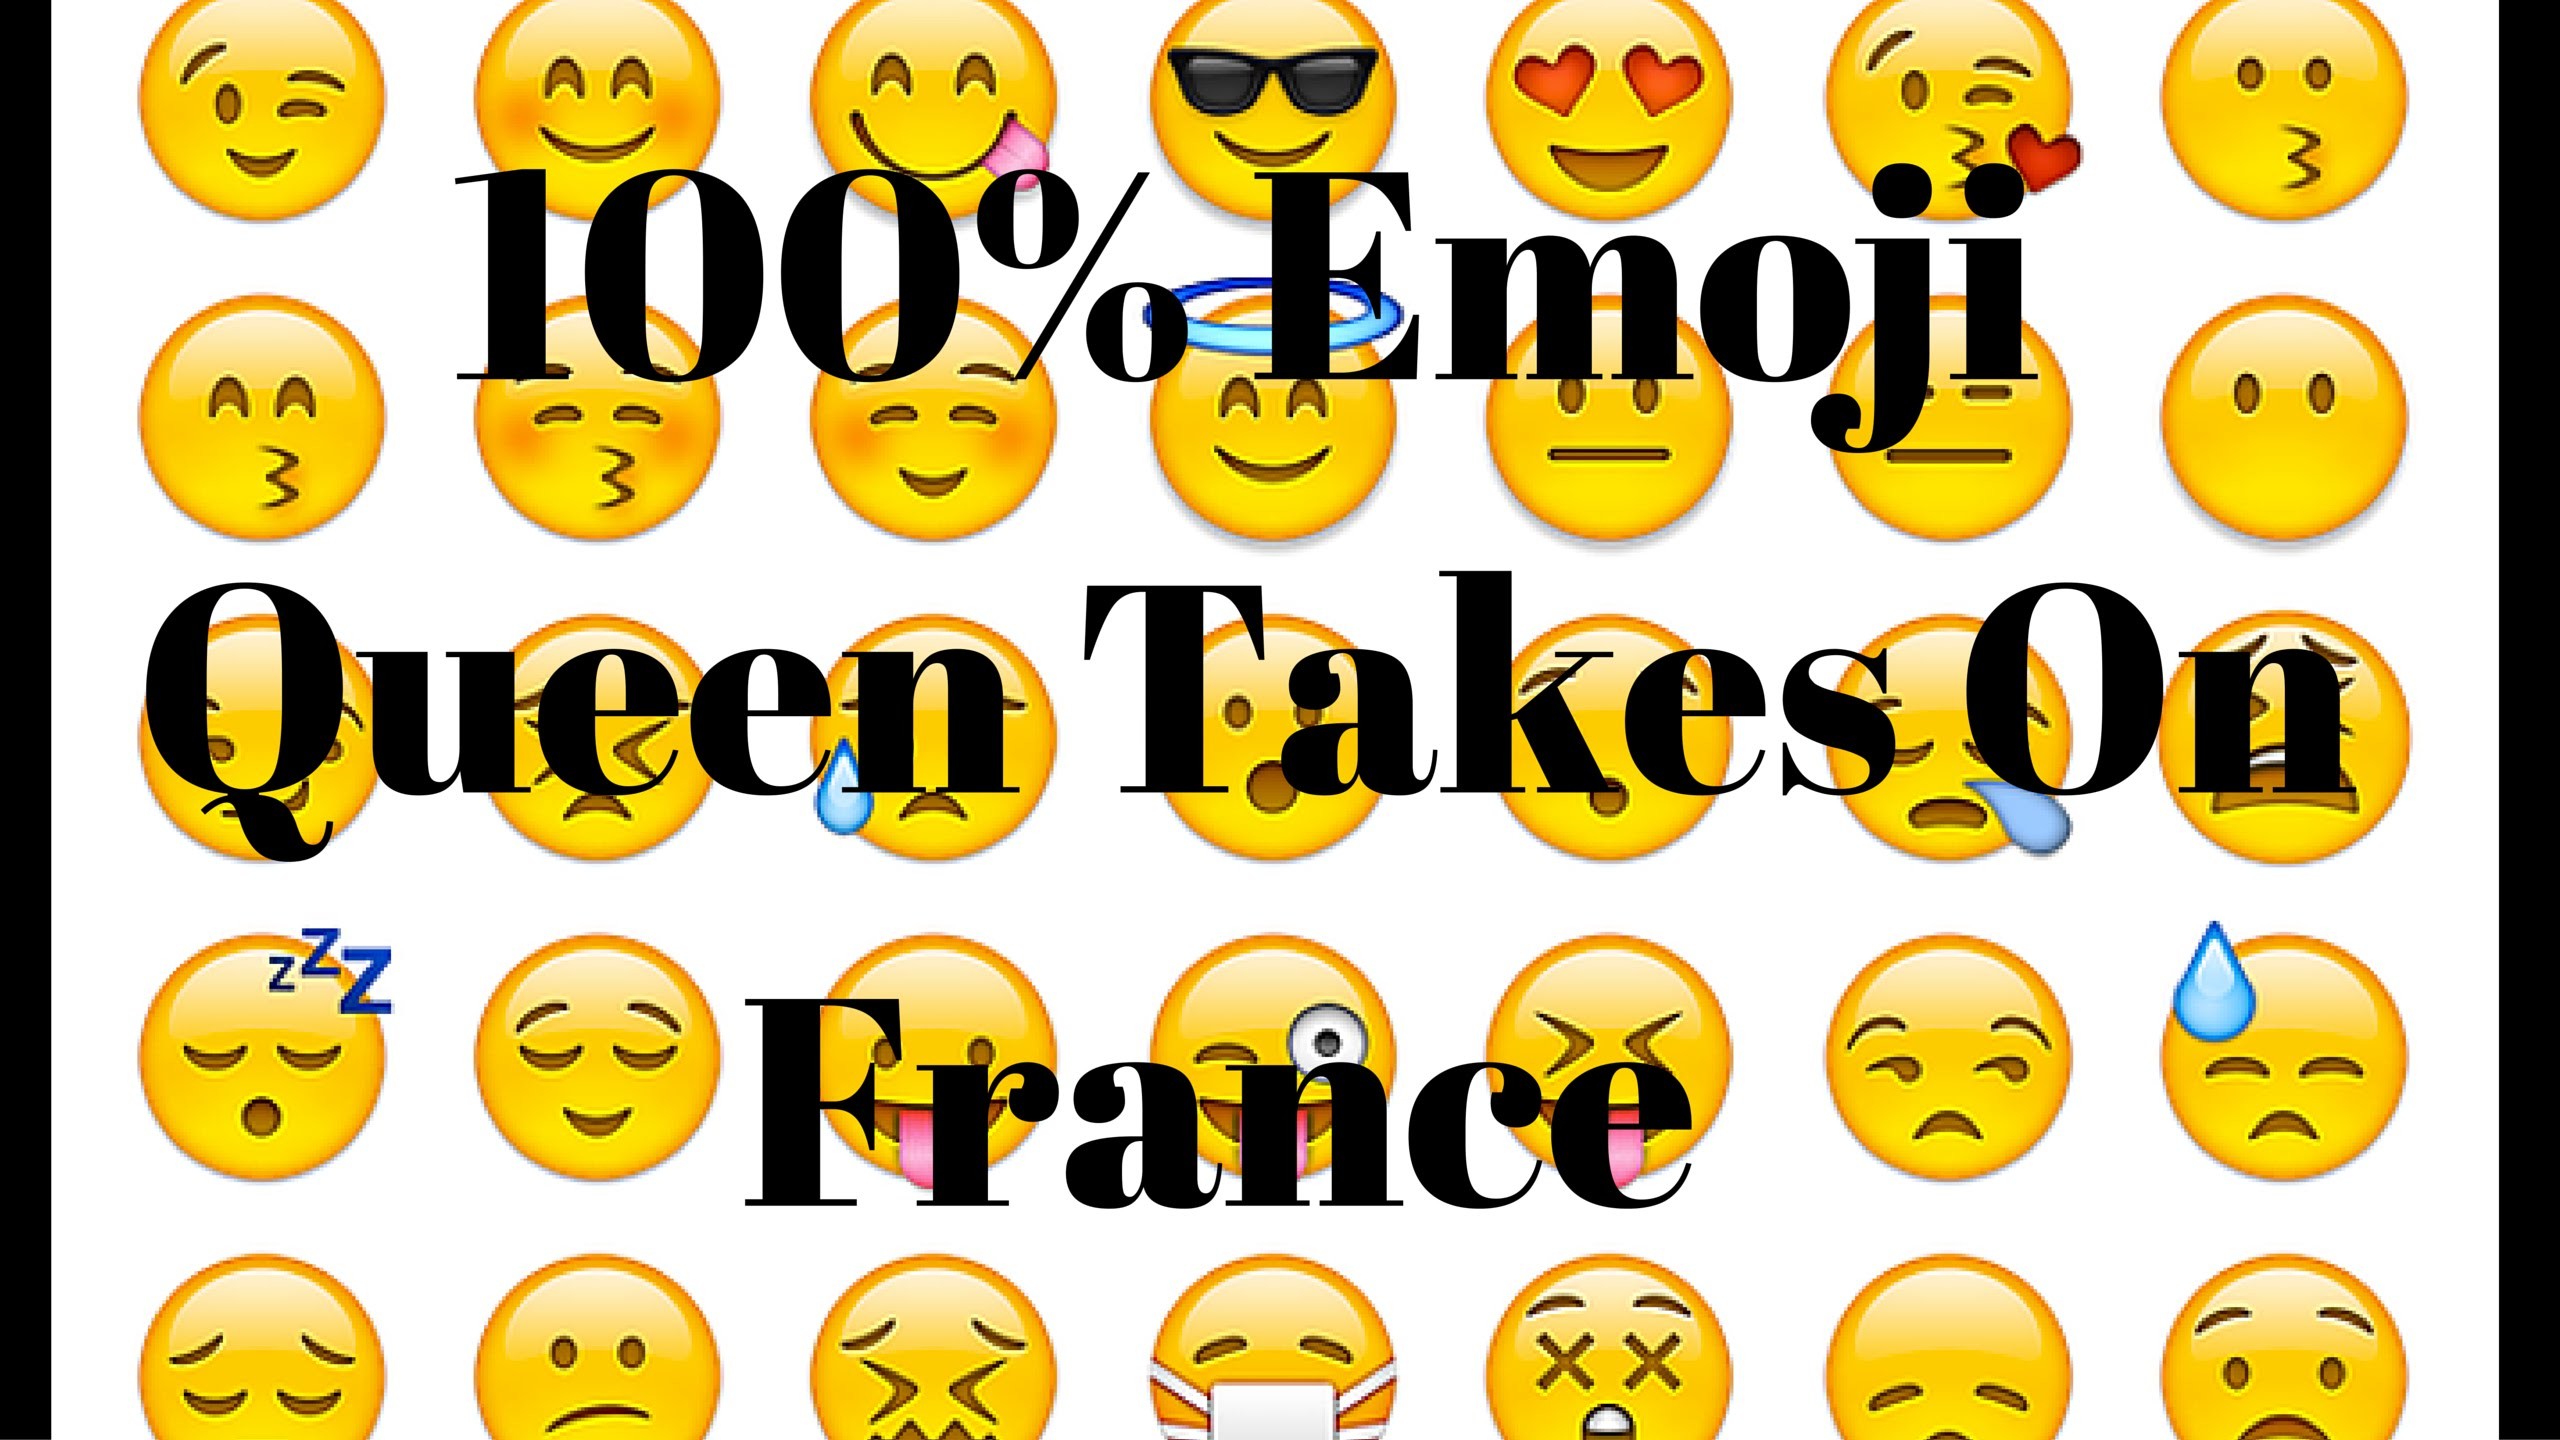 2560x1440, 100% Emoji Queen Takes On France ~ Part - Queen Wallpapers Emoji - HD Wallpaper 